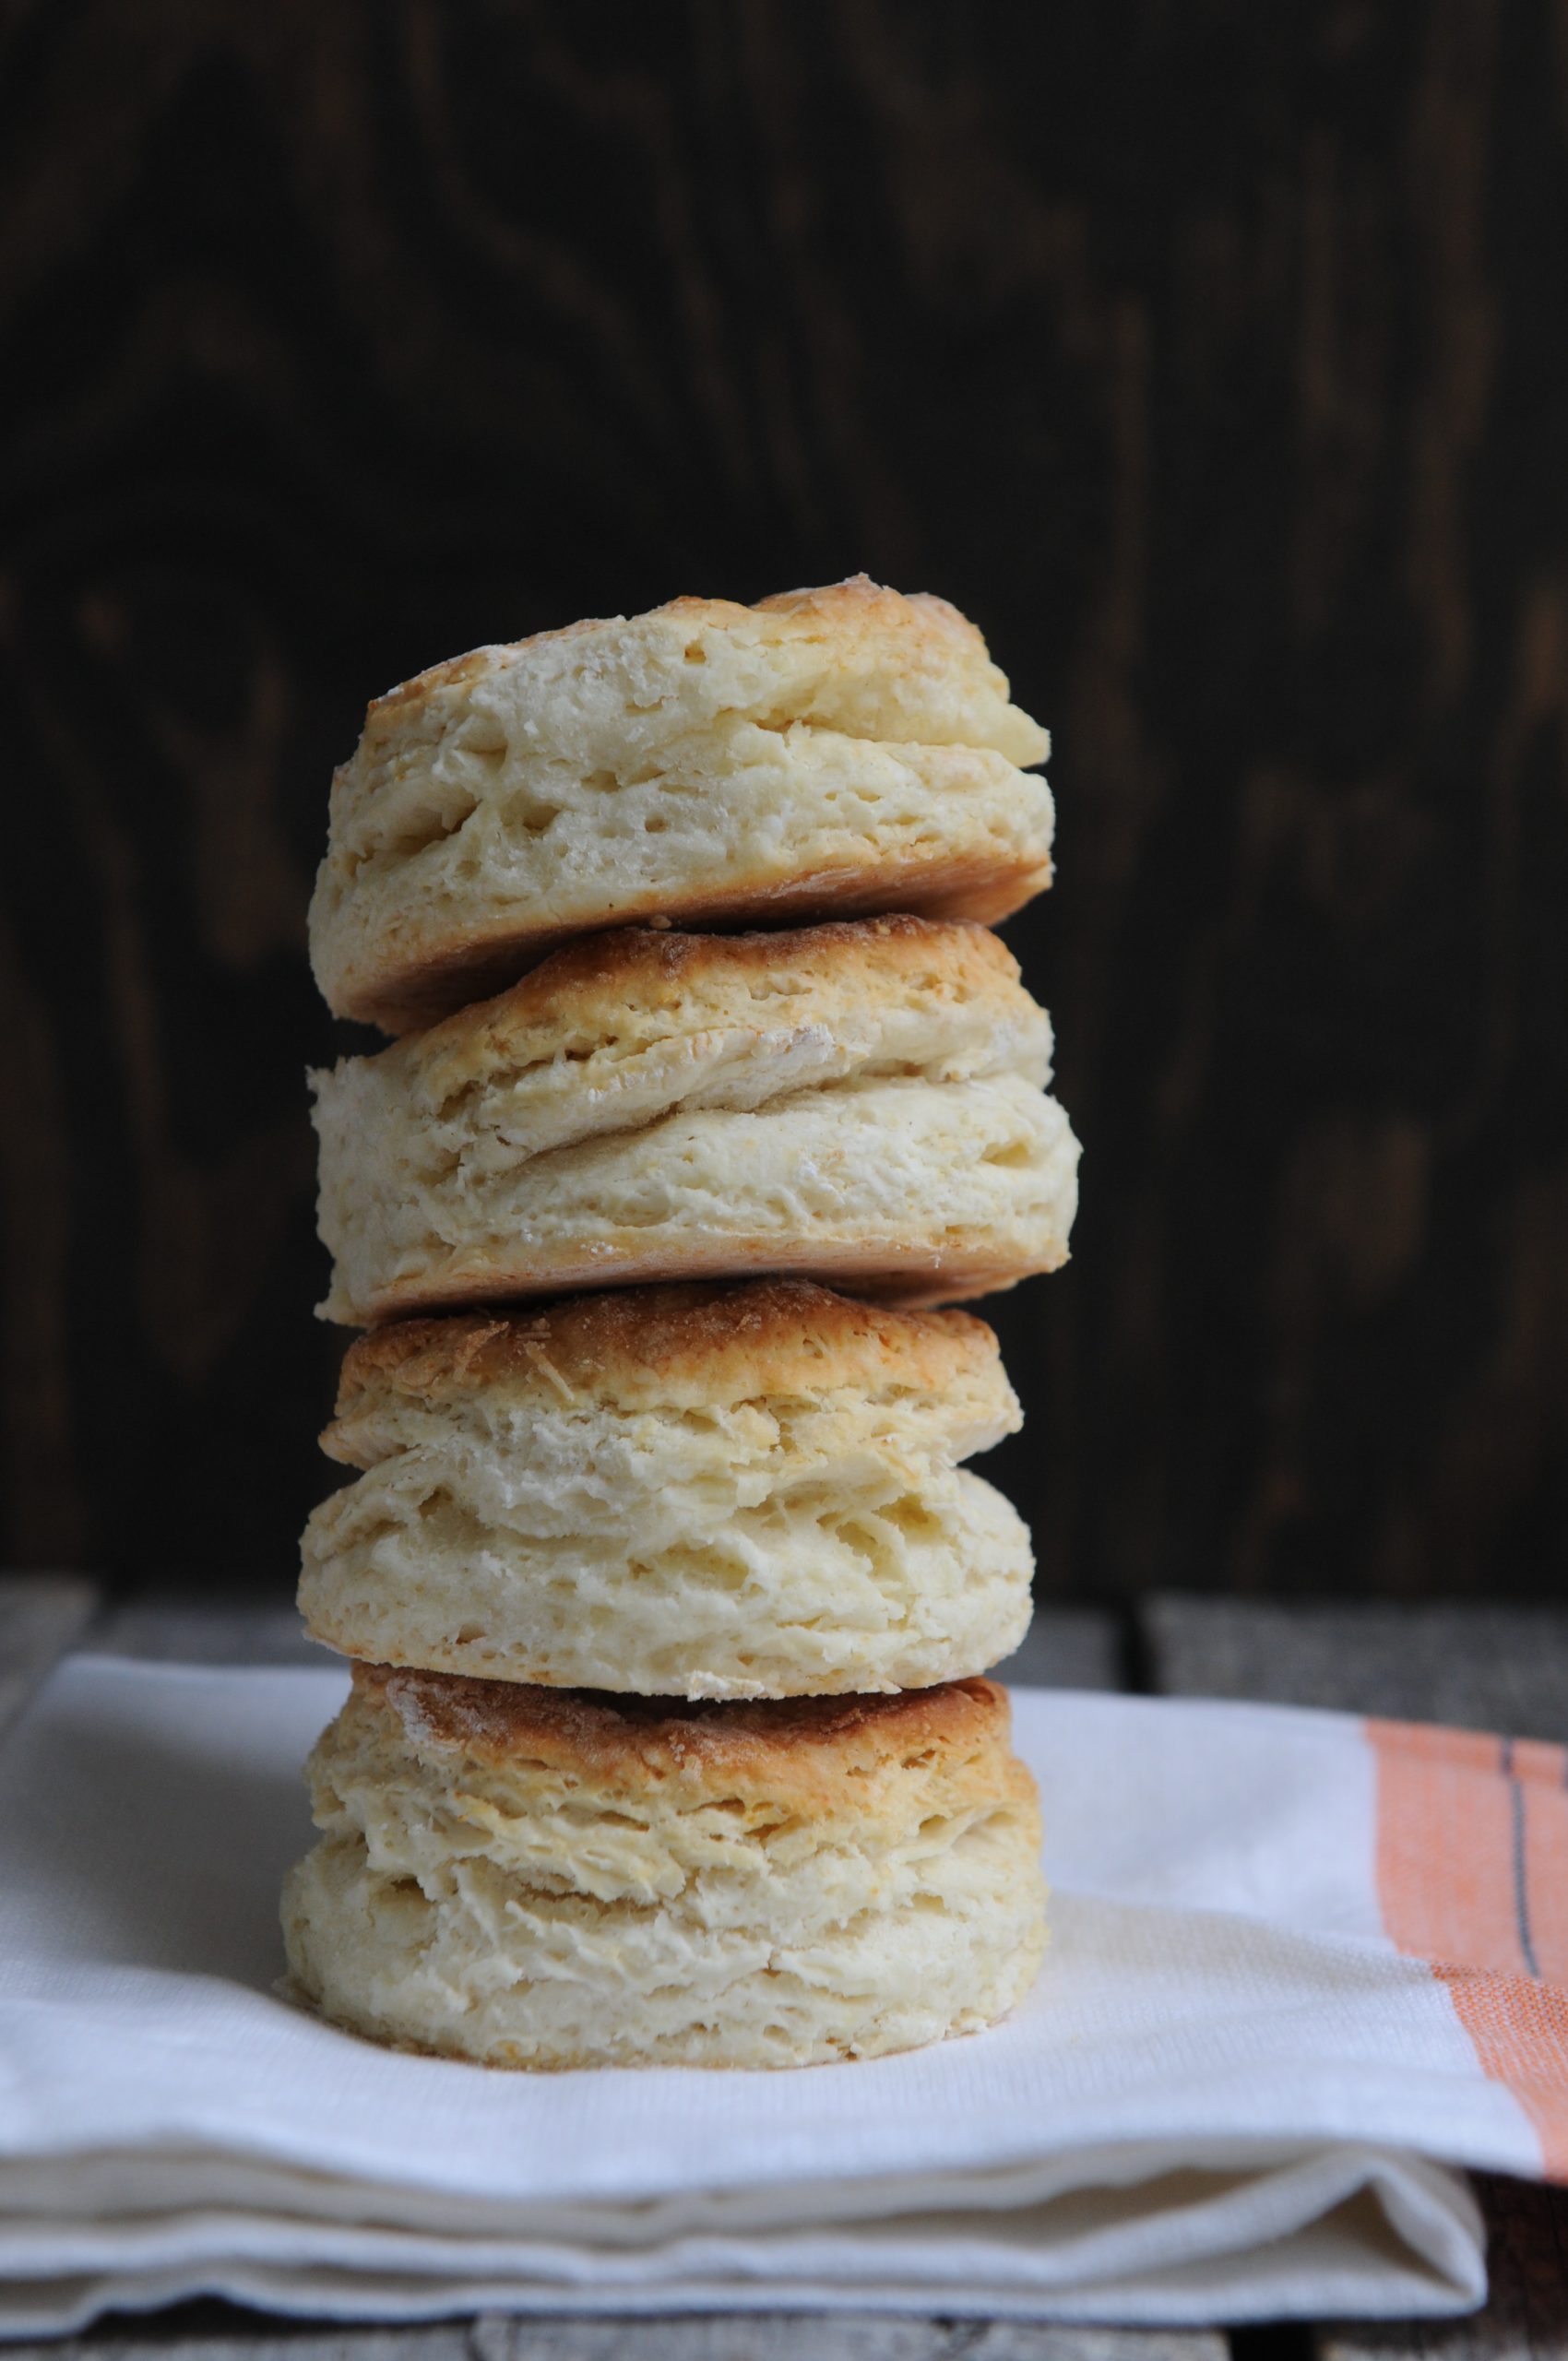 Four buttermilk biscuits